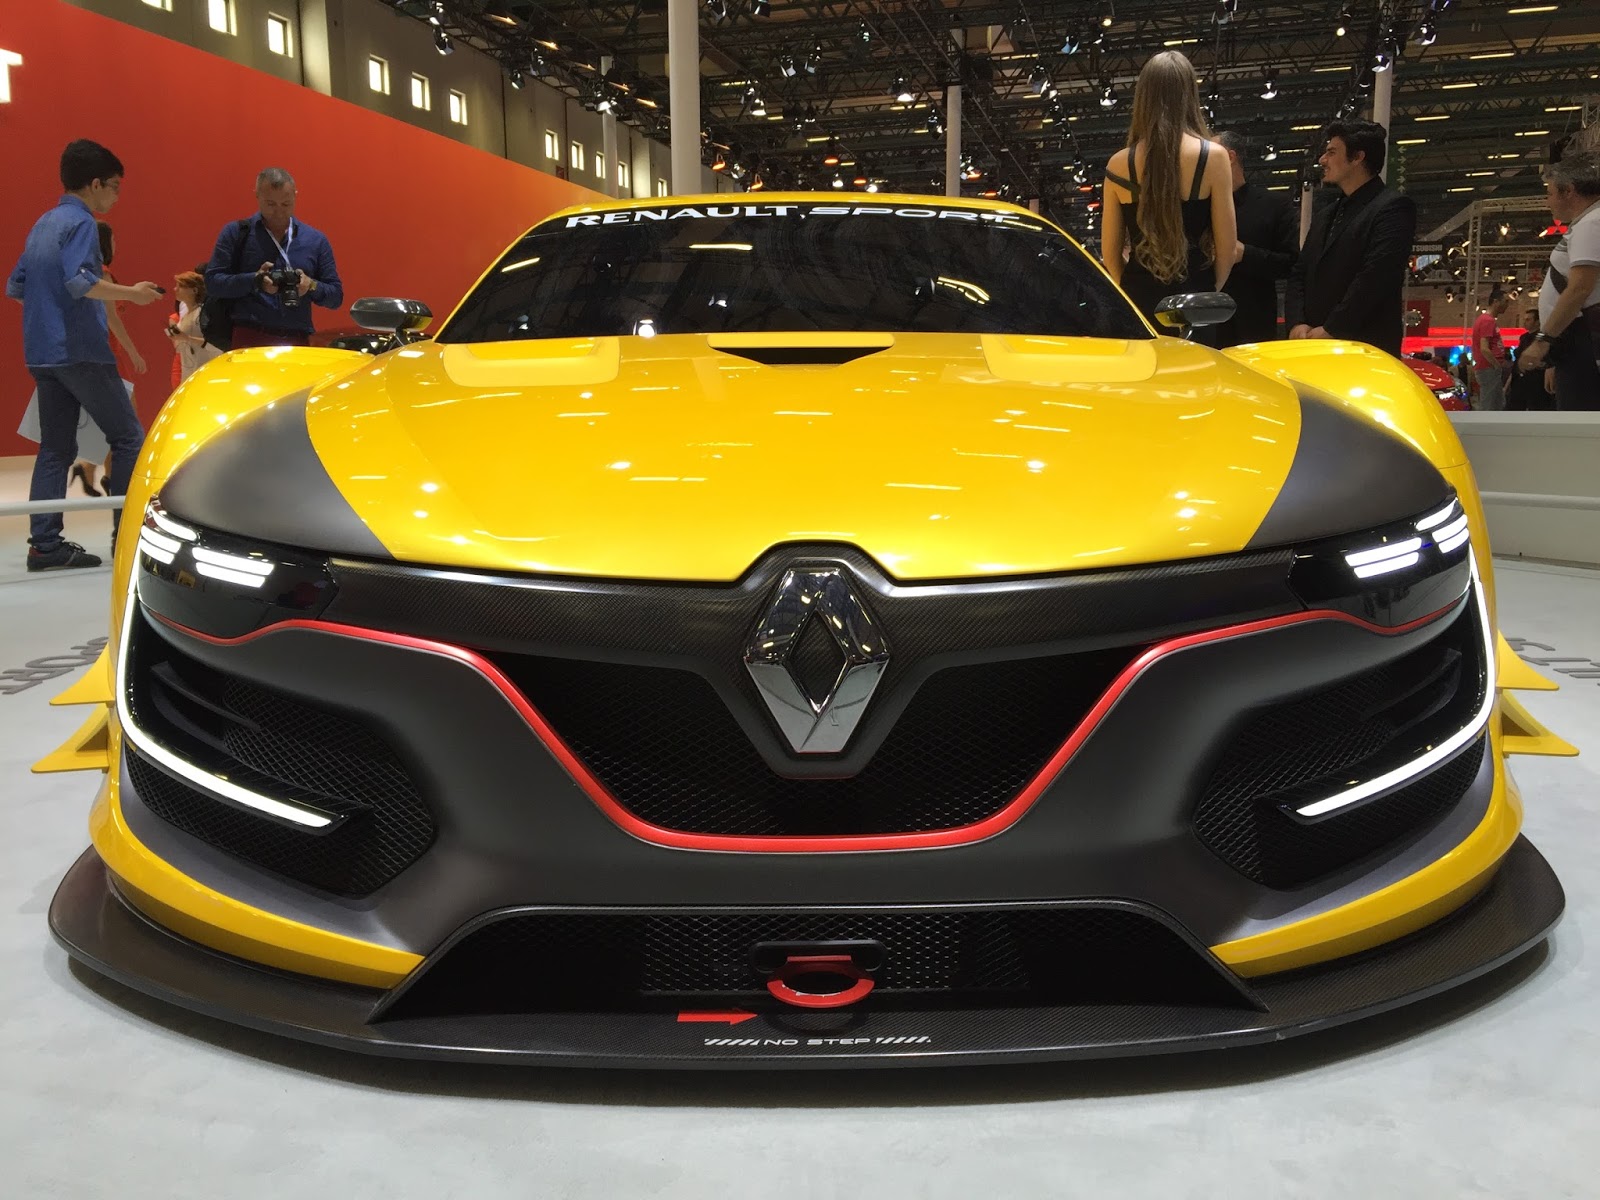 Renault series